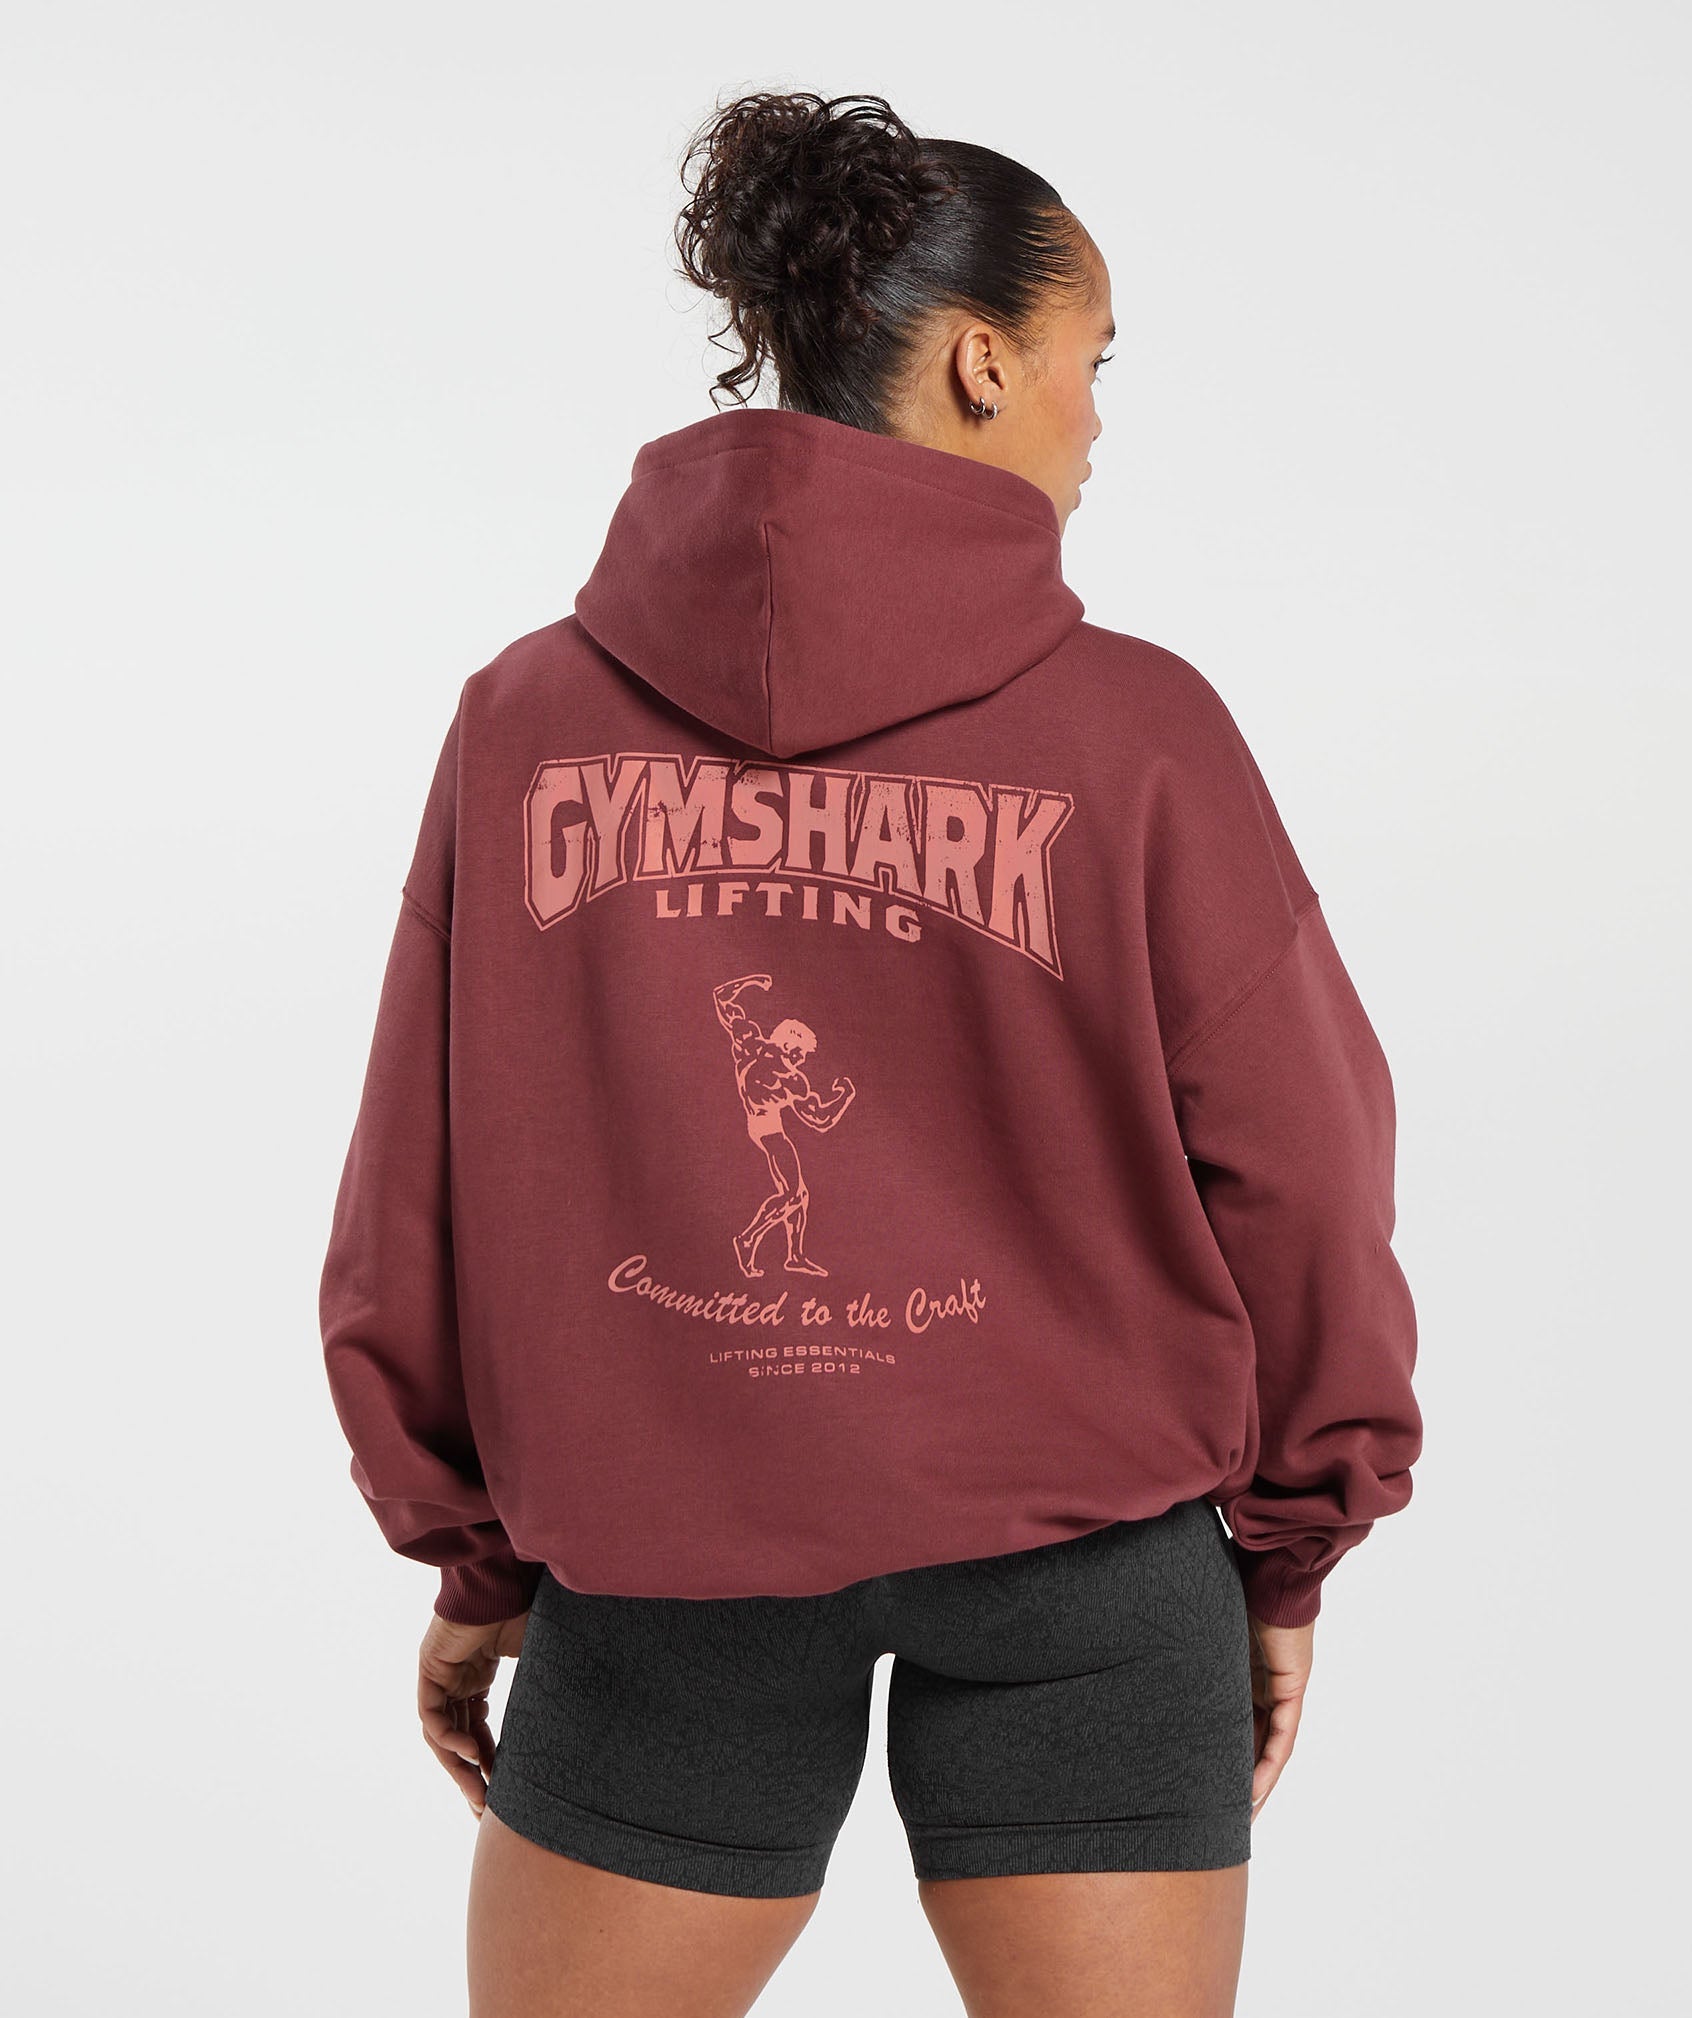 Women's Gym Hoodies & Workout Hoodies - Gymshark